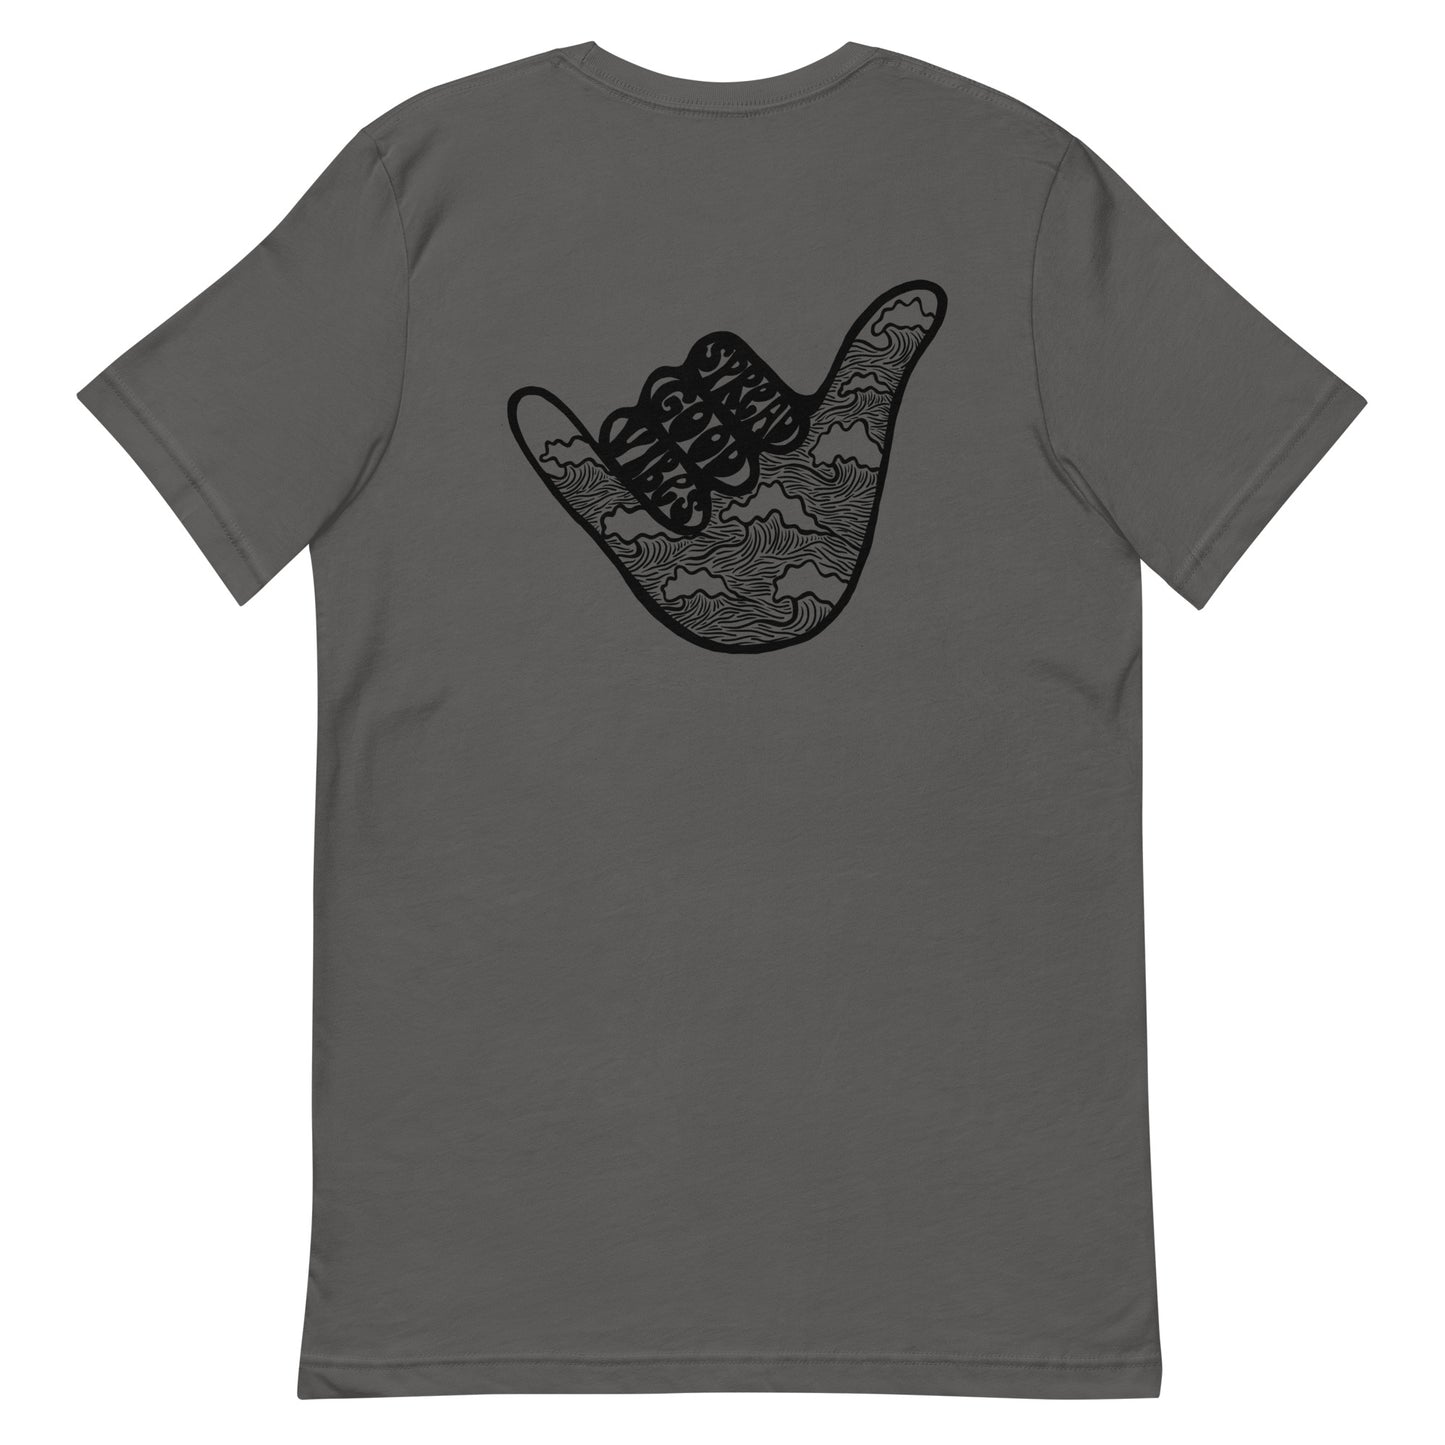 spread good vibes t-shirt (design on back)